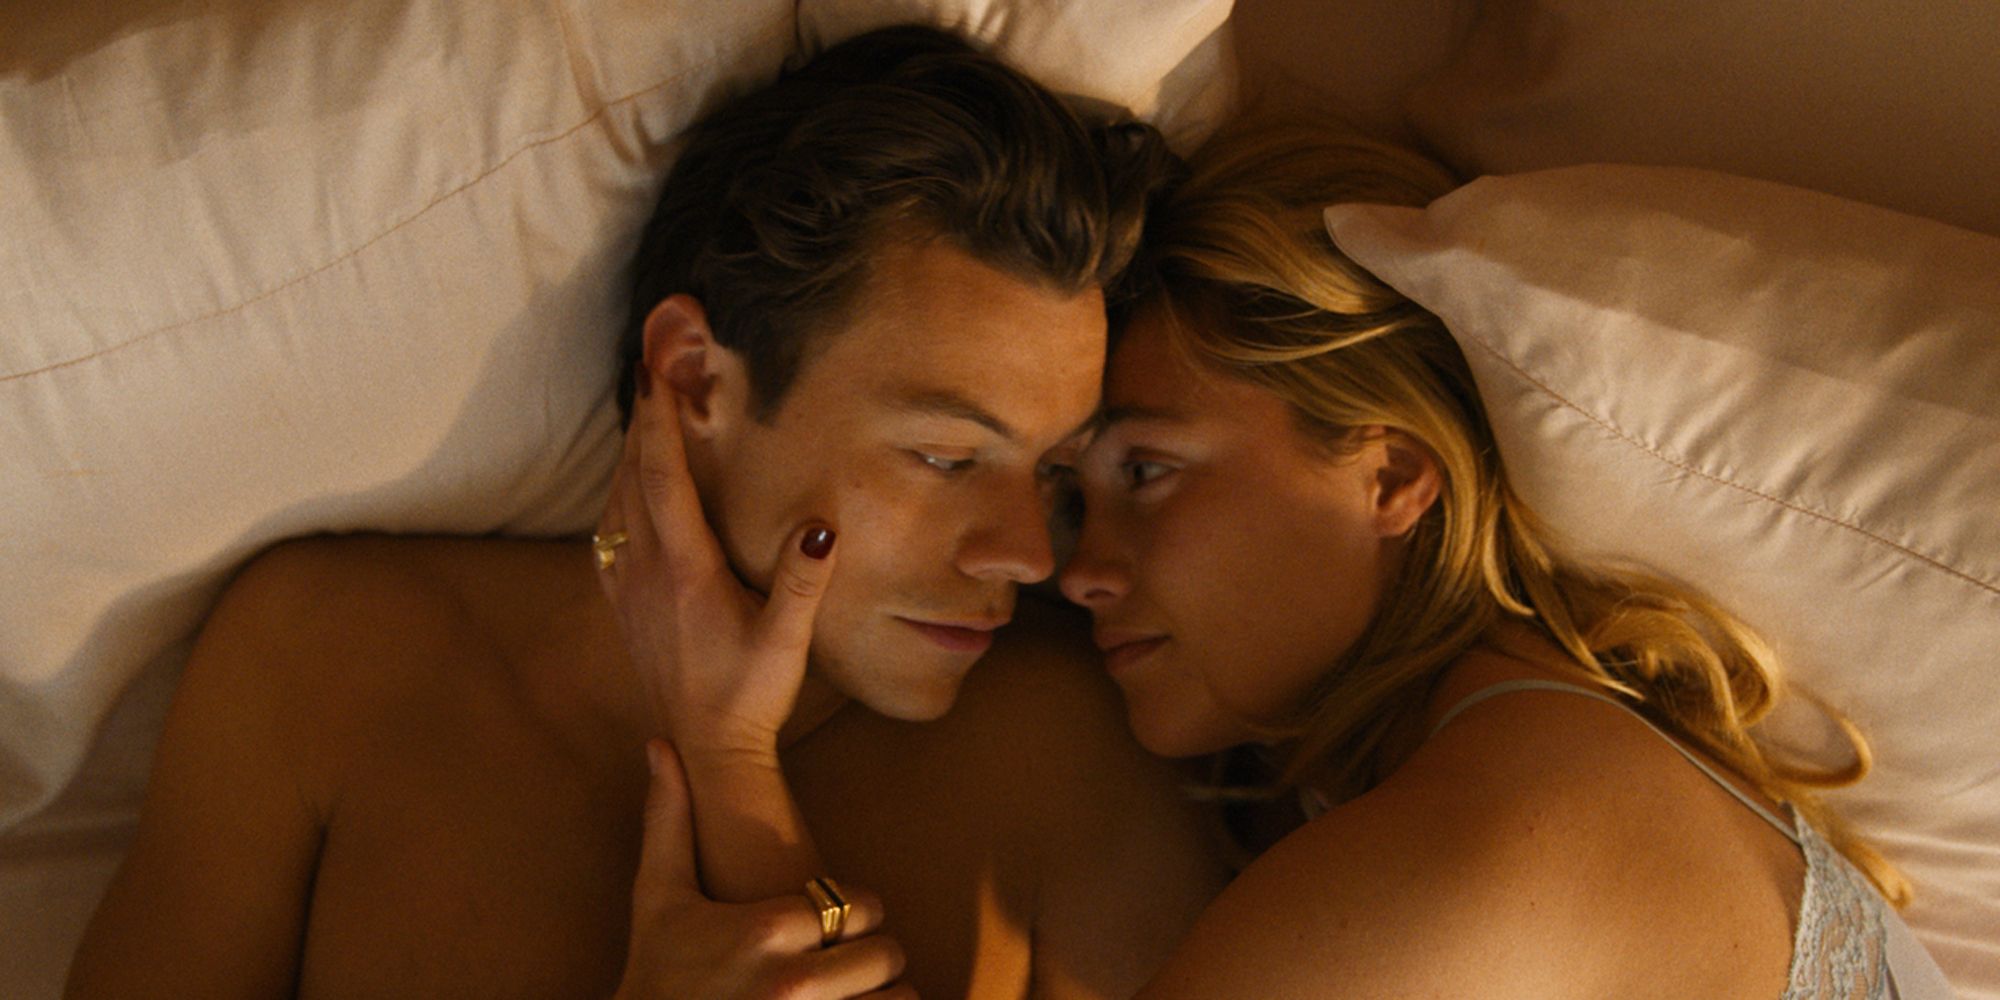 26 Sexiest Movies on Amazon Prime - Hot Sex Scenes on Amazon